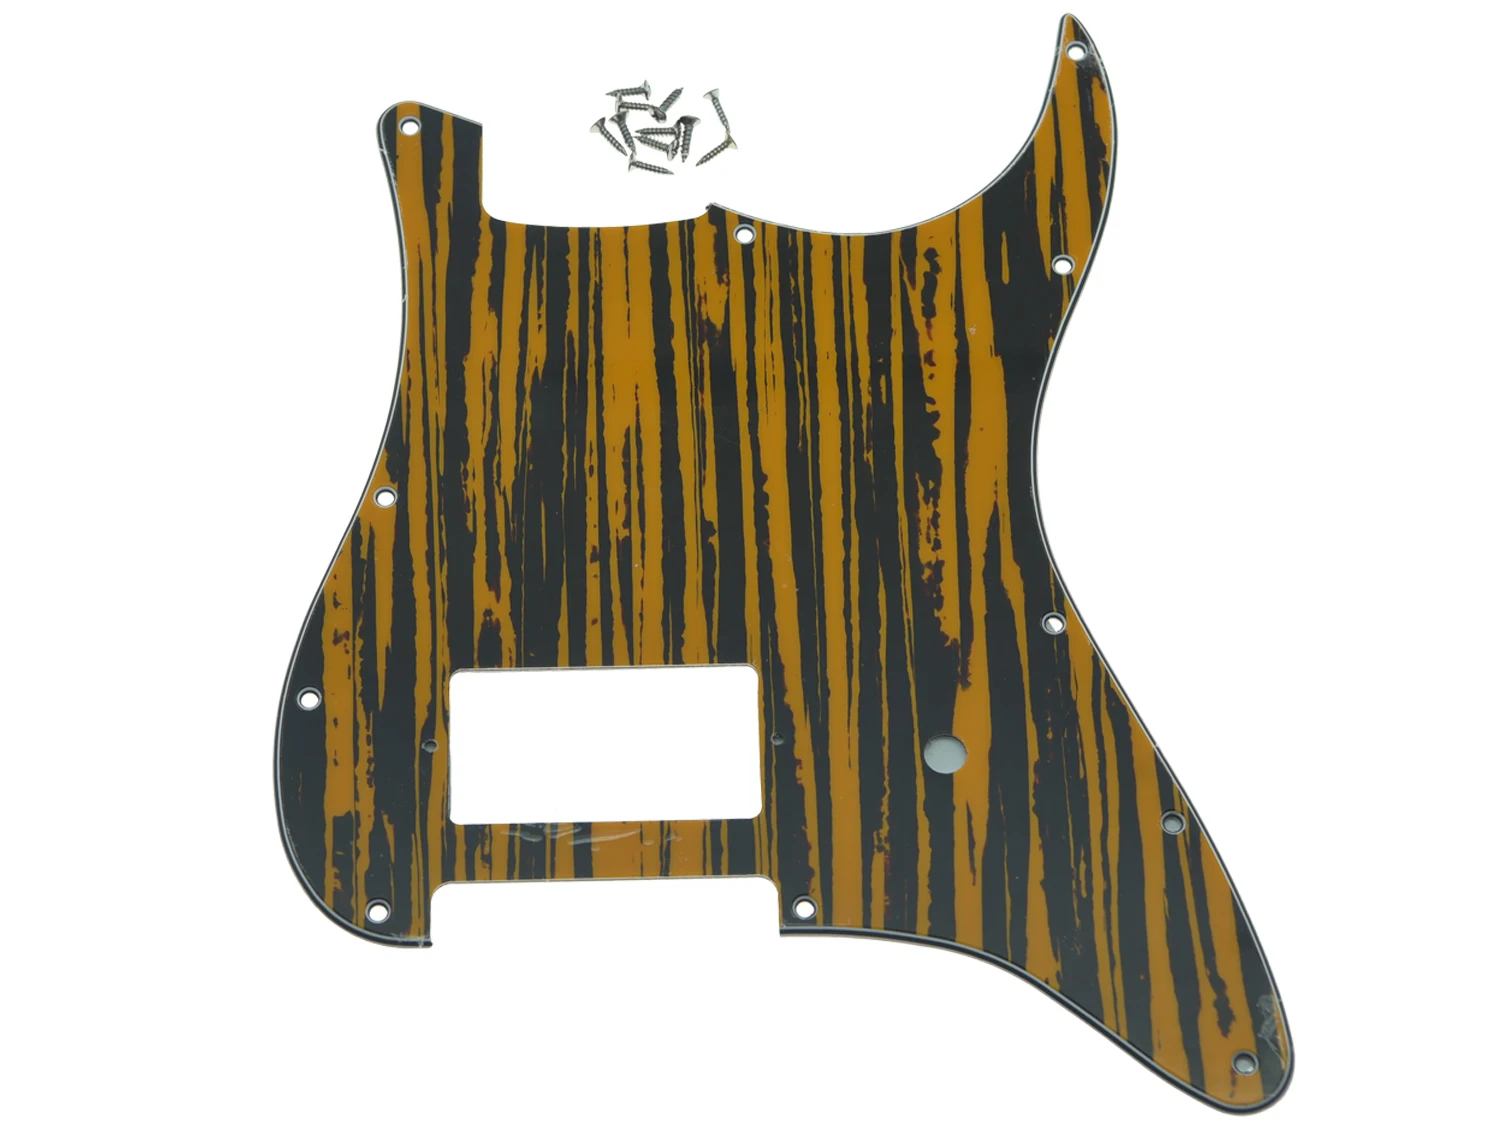 Dopro ST Strat один хамбакер гитара накладка царапины пластины подходит Fender Delonge Stratocaster различные цвета